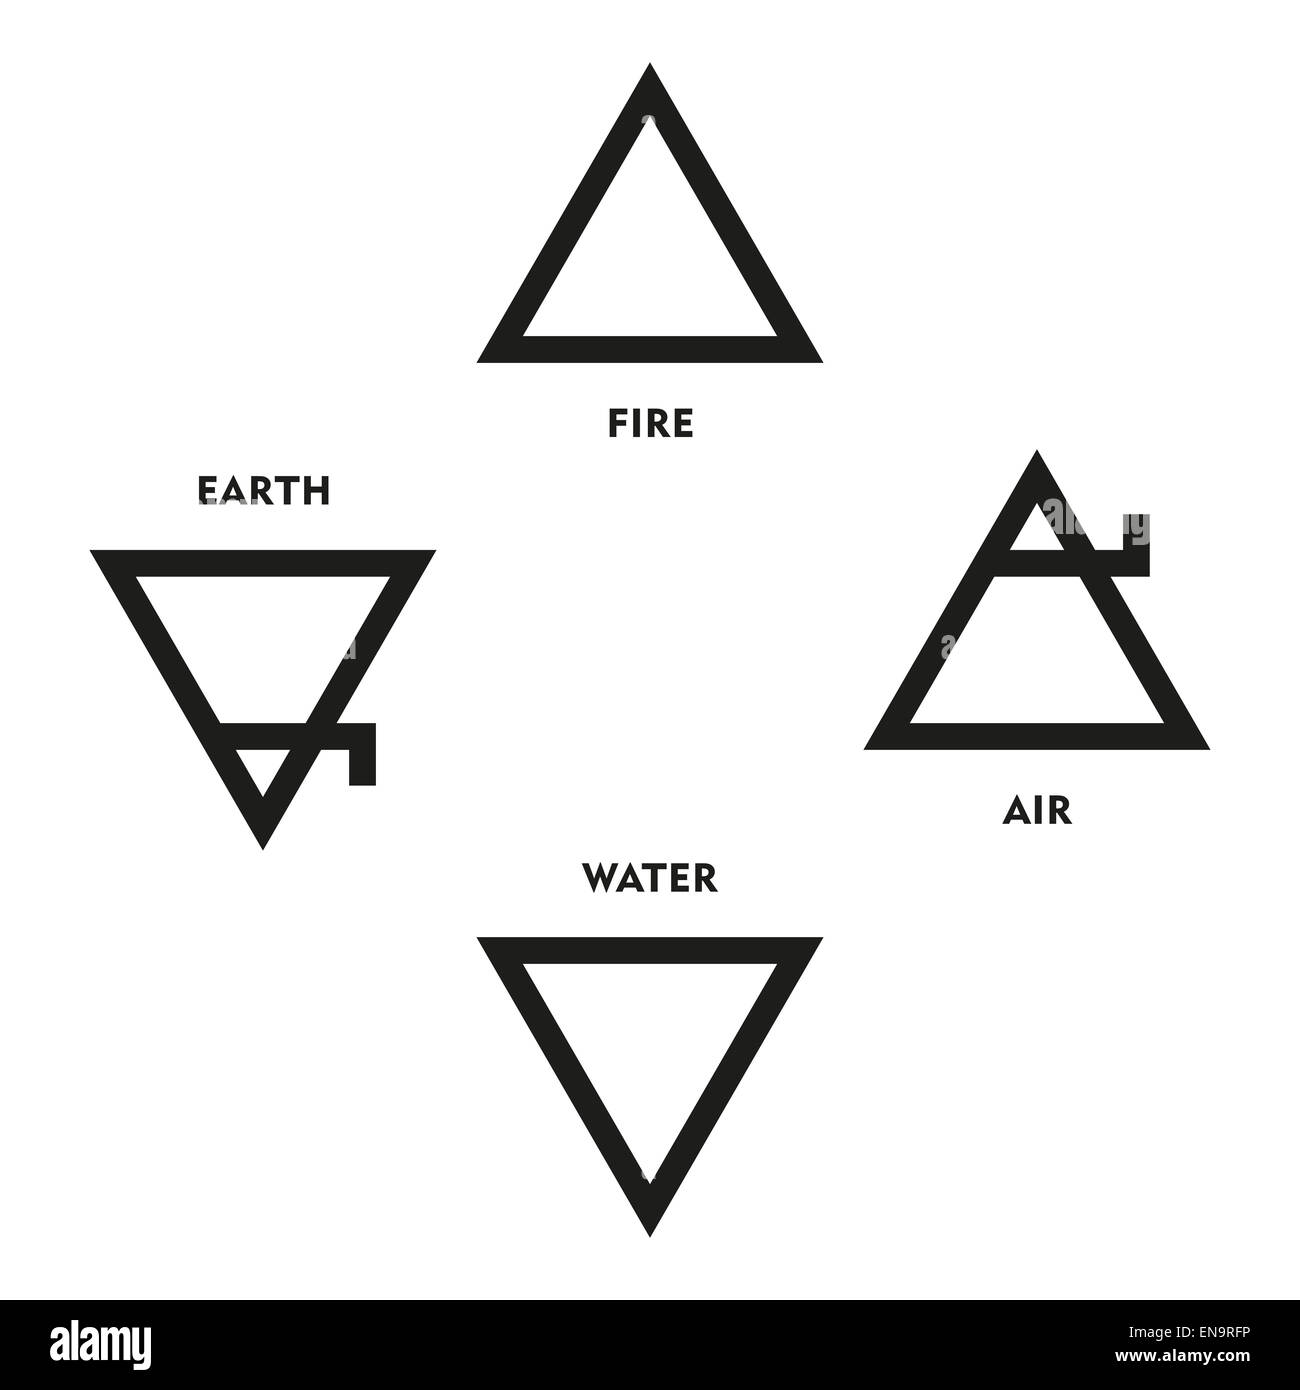 Quatre éléments classiques des symboles de l'alchimie médiévale. Triangles représentant le feu, la terre, l'eau et l'air. L'illustration. Banque D'Images